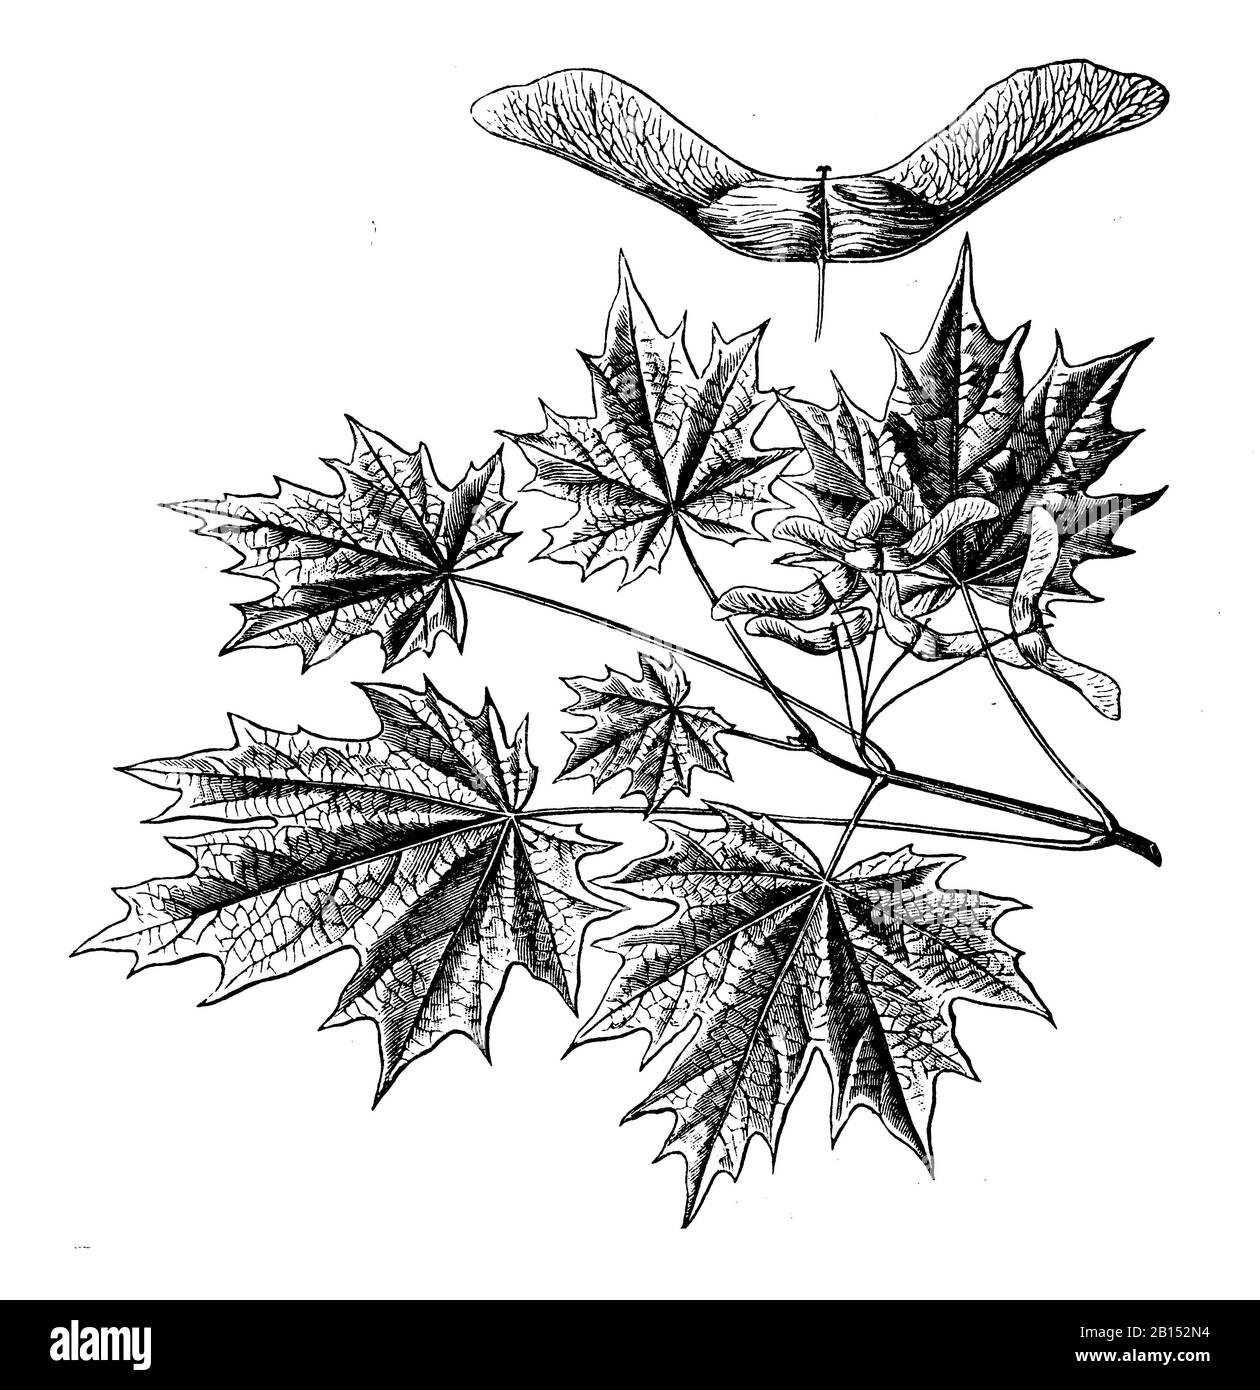 Acero norvegese, Acer platanoides, Spitzahorn, oben Frucht, aereo Éraable, H.W, und H. Gedan (libro di botanica, 1910) Foto Stock